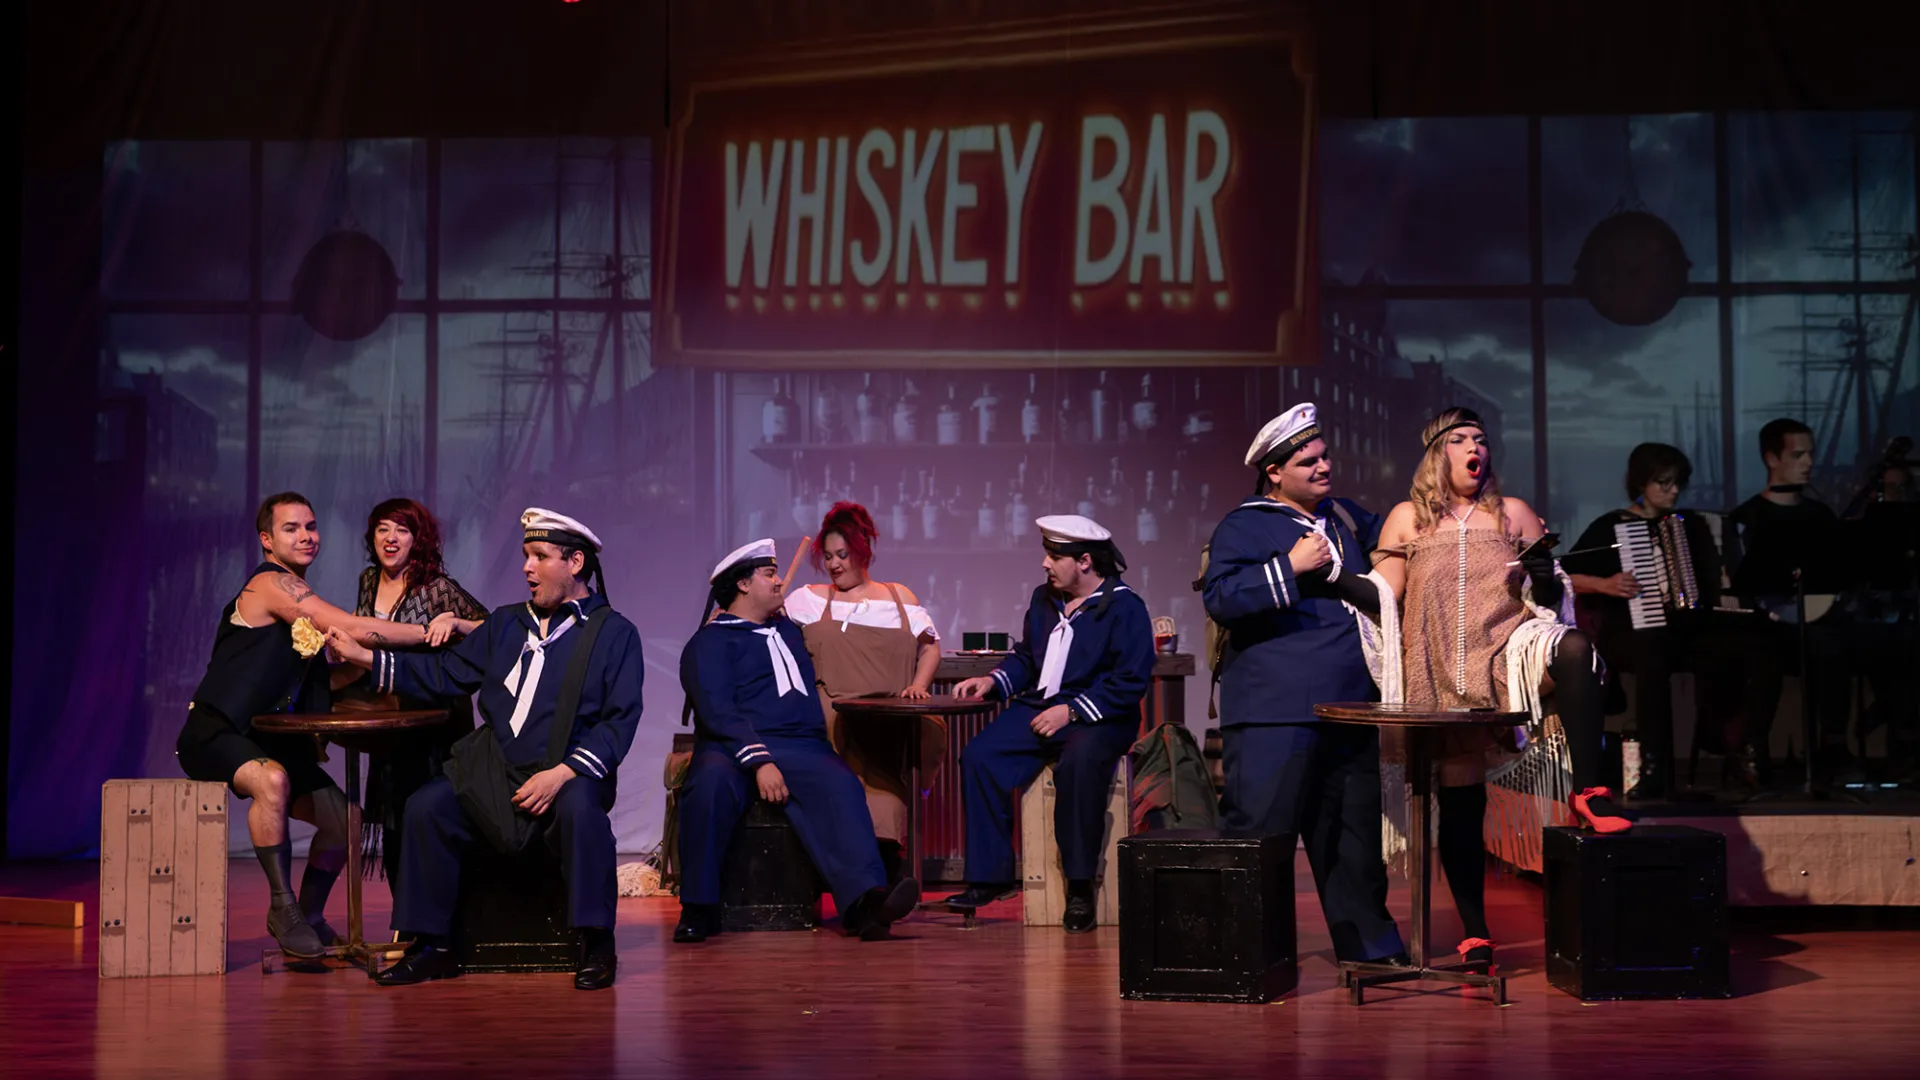 CSUSB Opera Theatre scene from “The Next Whisky Bar.”